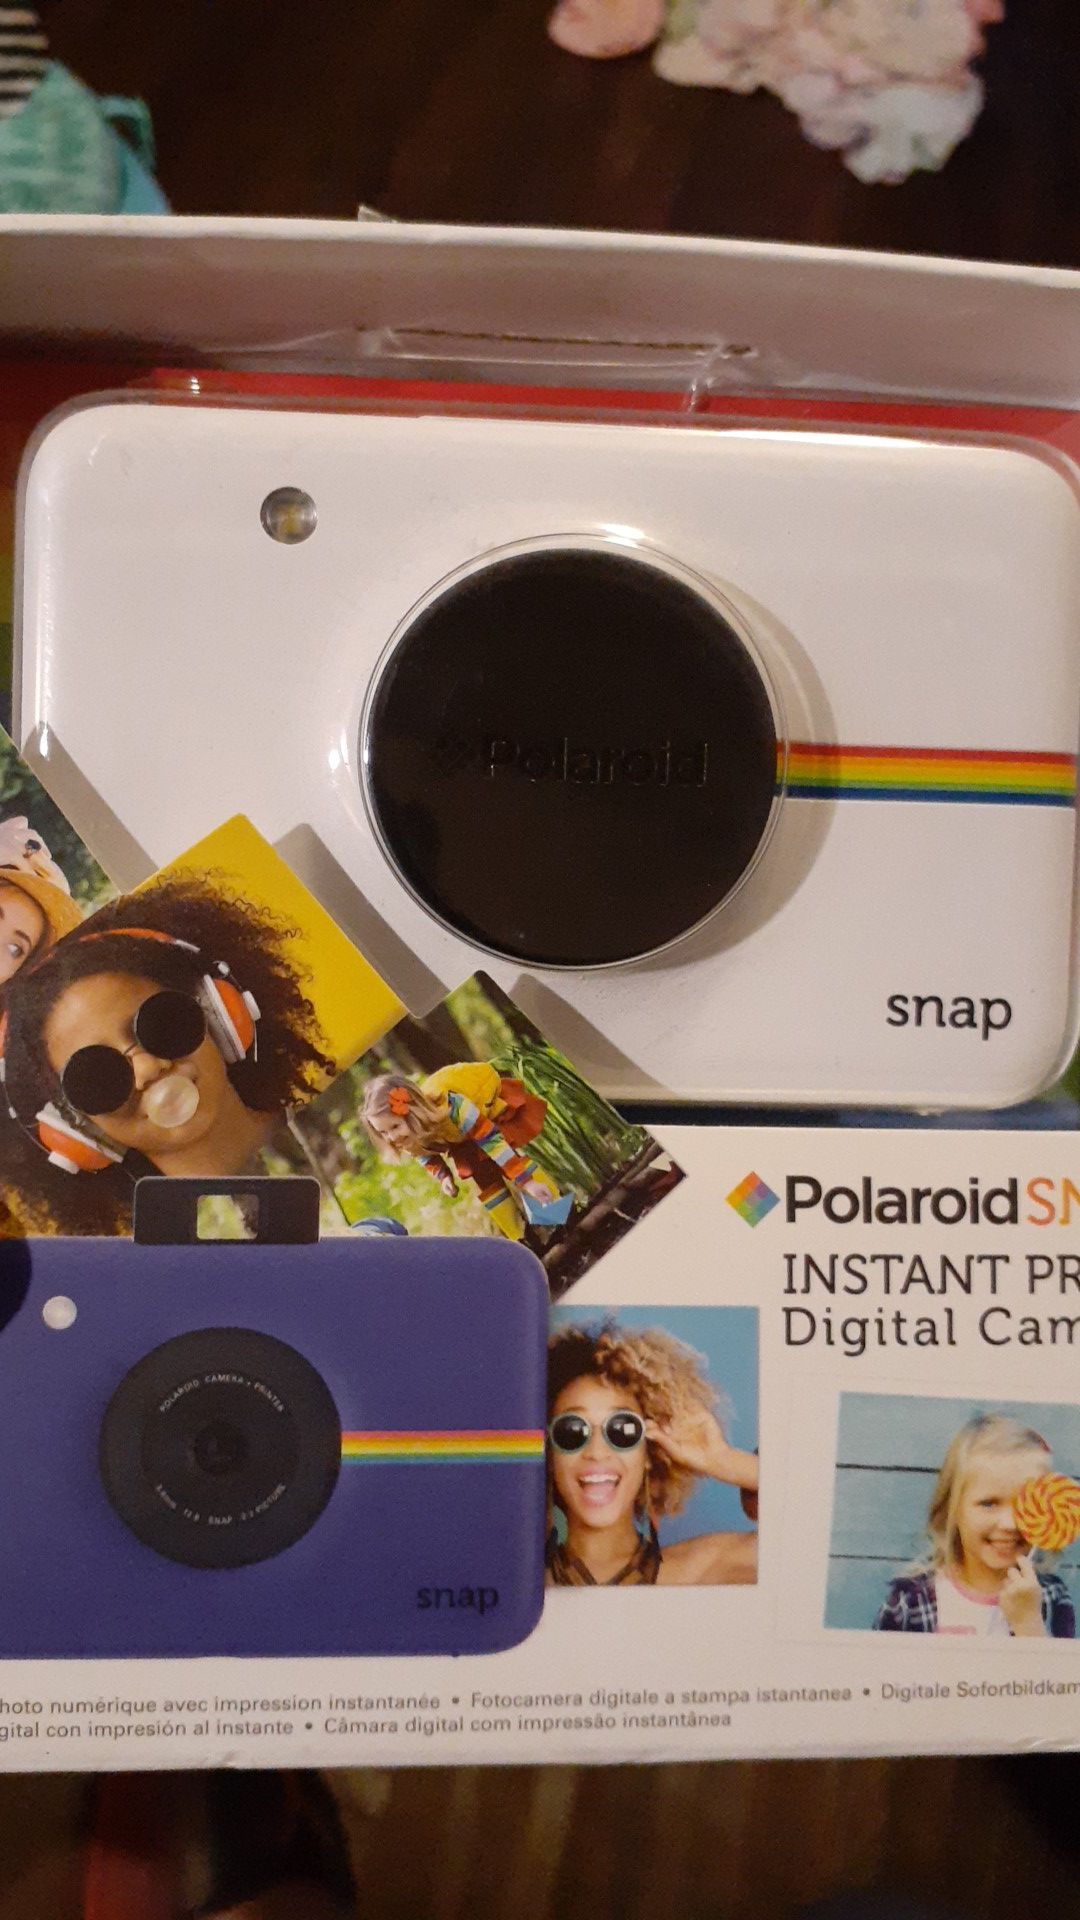 Polaroid Snap Instant Print Digital